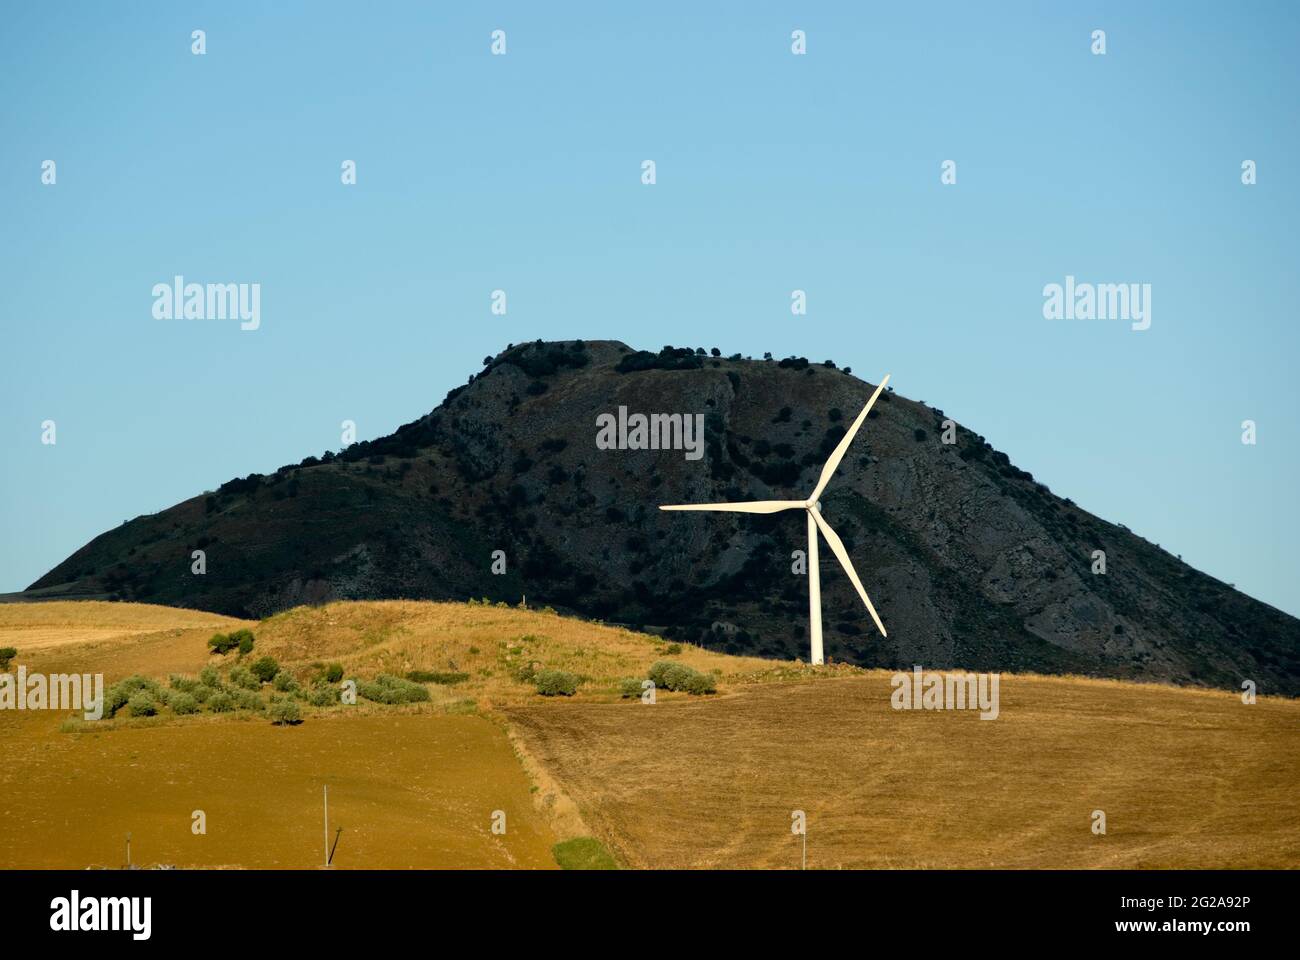 single wind turbine in rural area Stock Photo